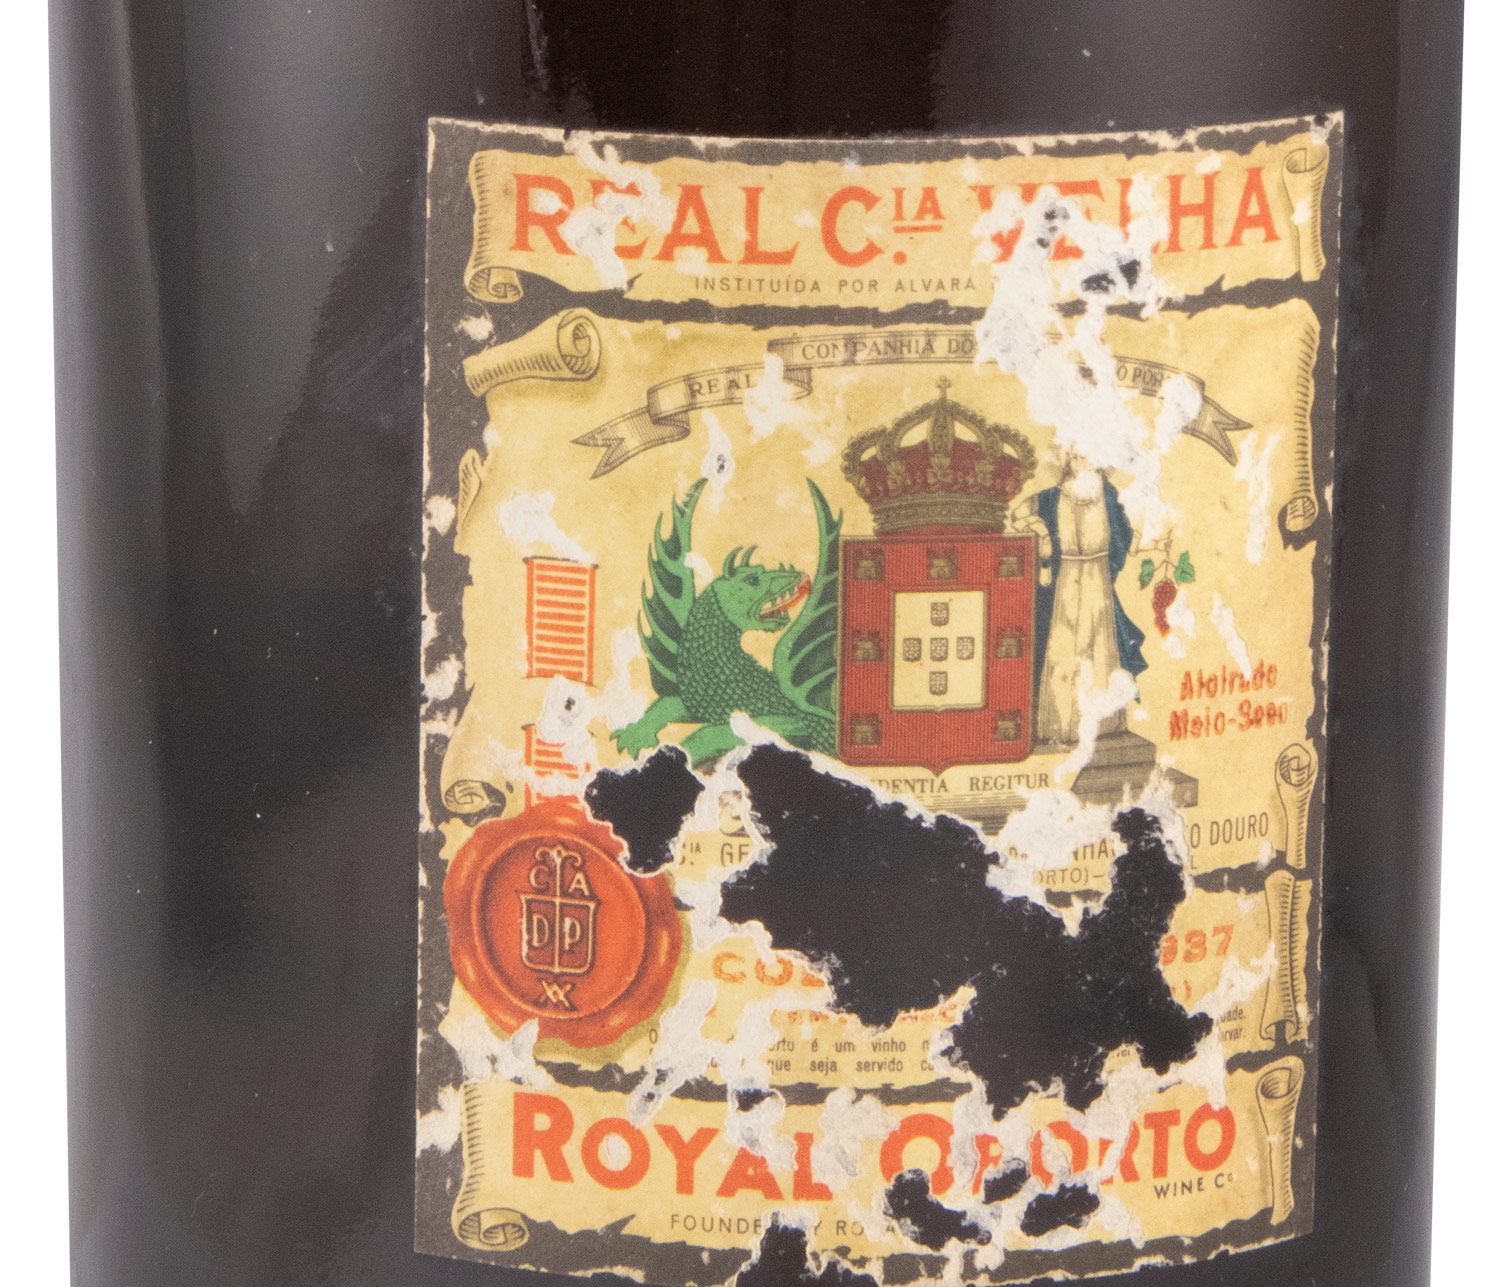 1937 Real Companhia Velha Colheita Porto